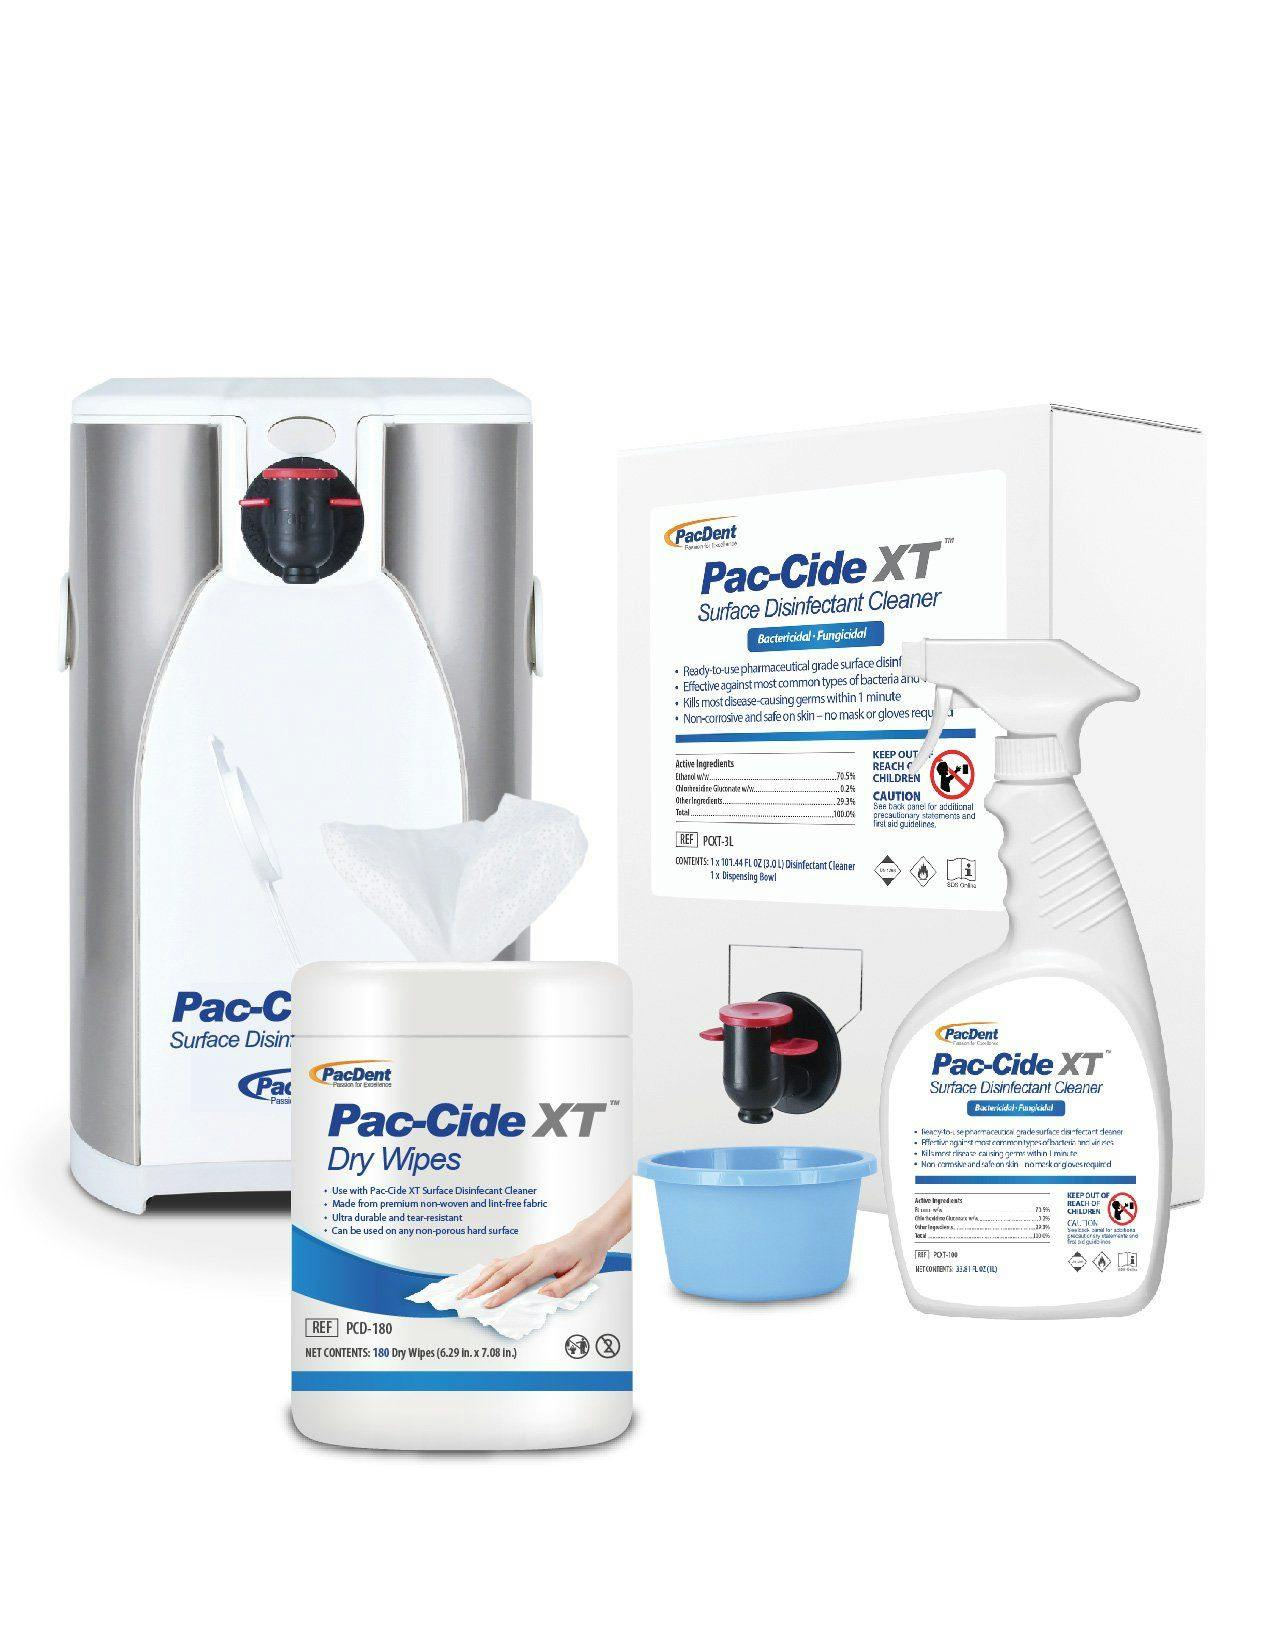 Pac-Cide XT surface disinfectant